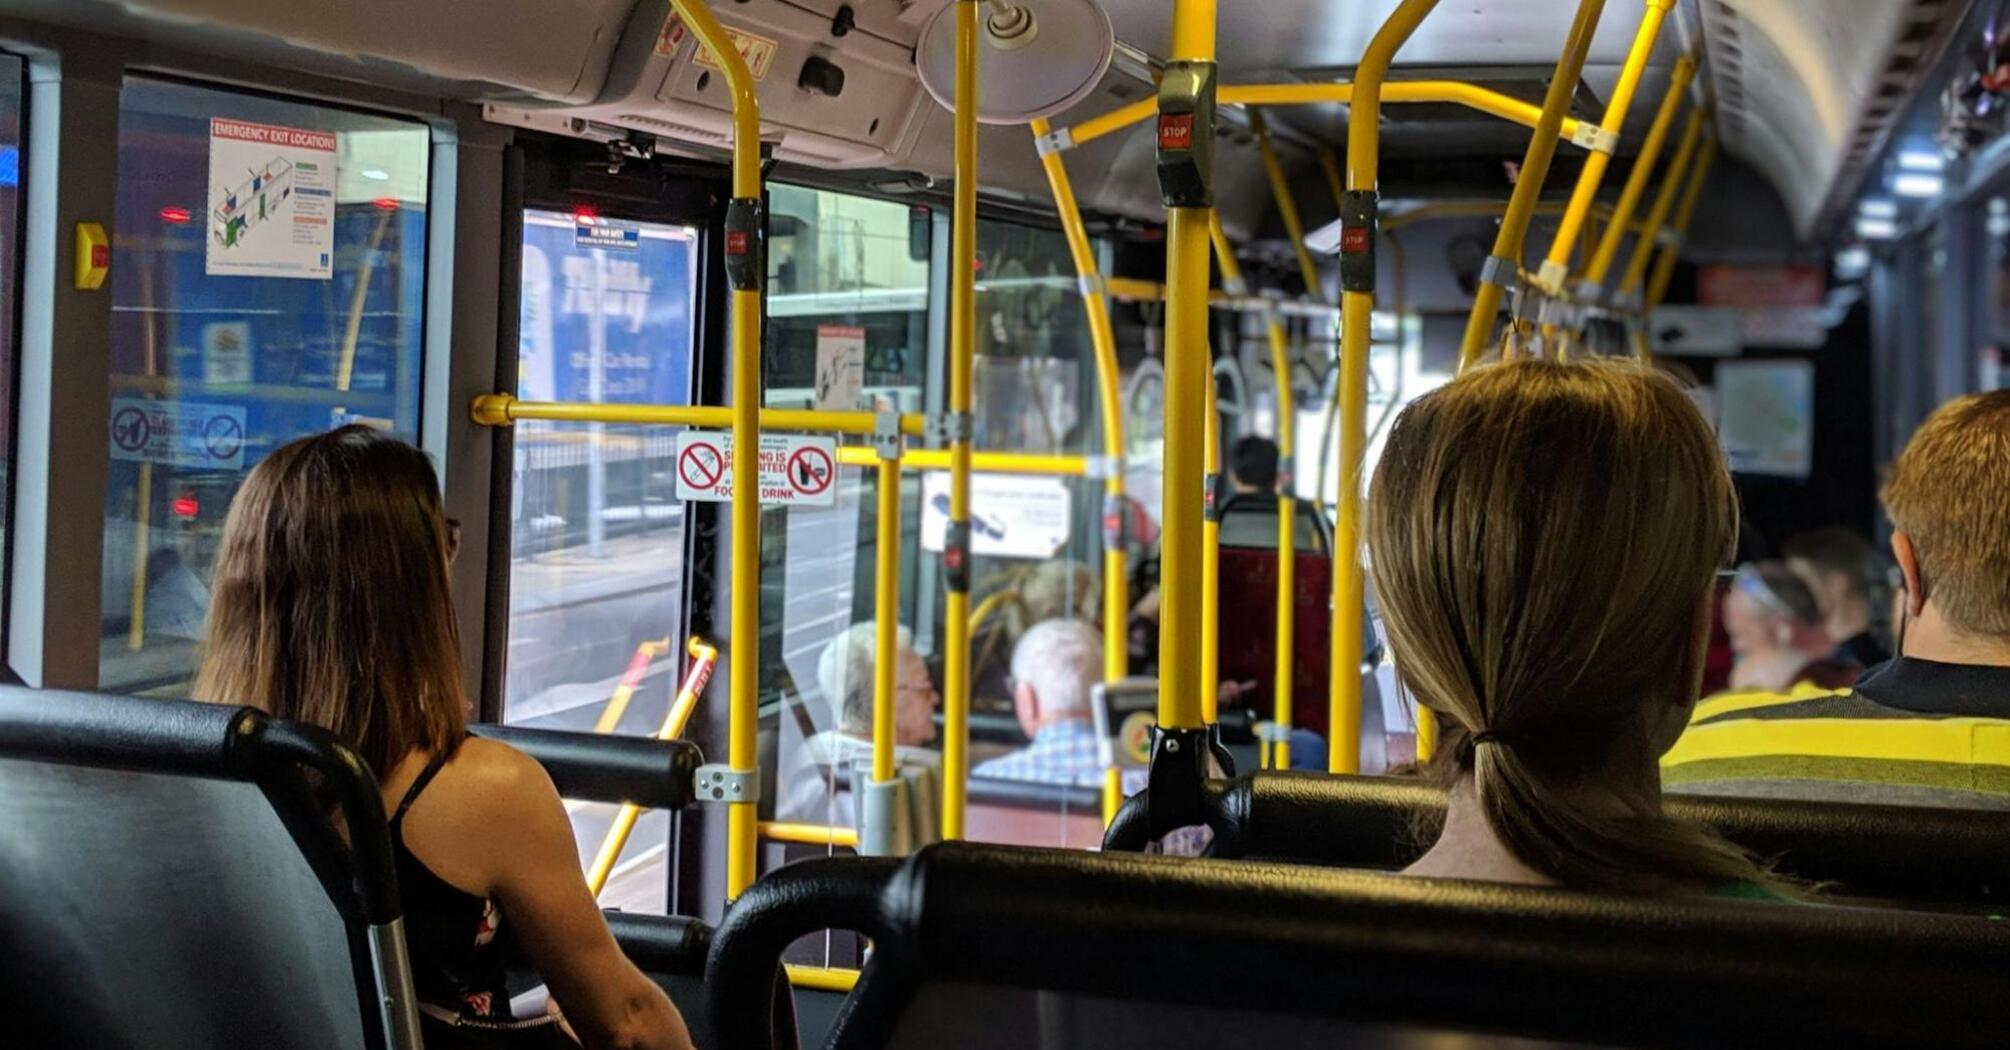 Passengers sitting inside a city bus in Nottingham